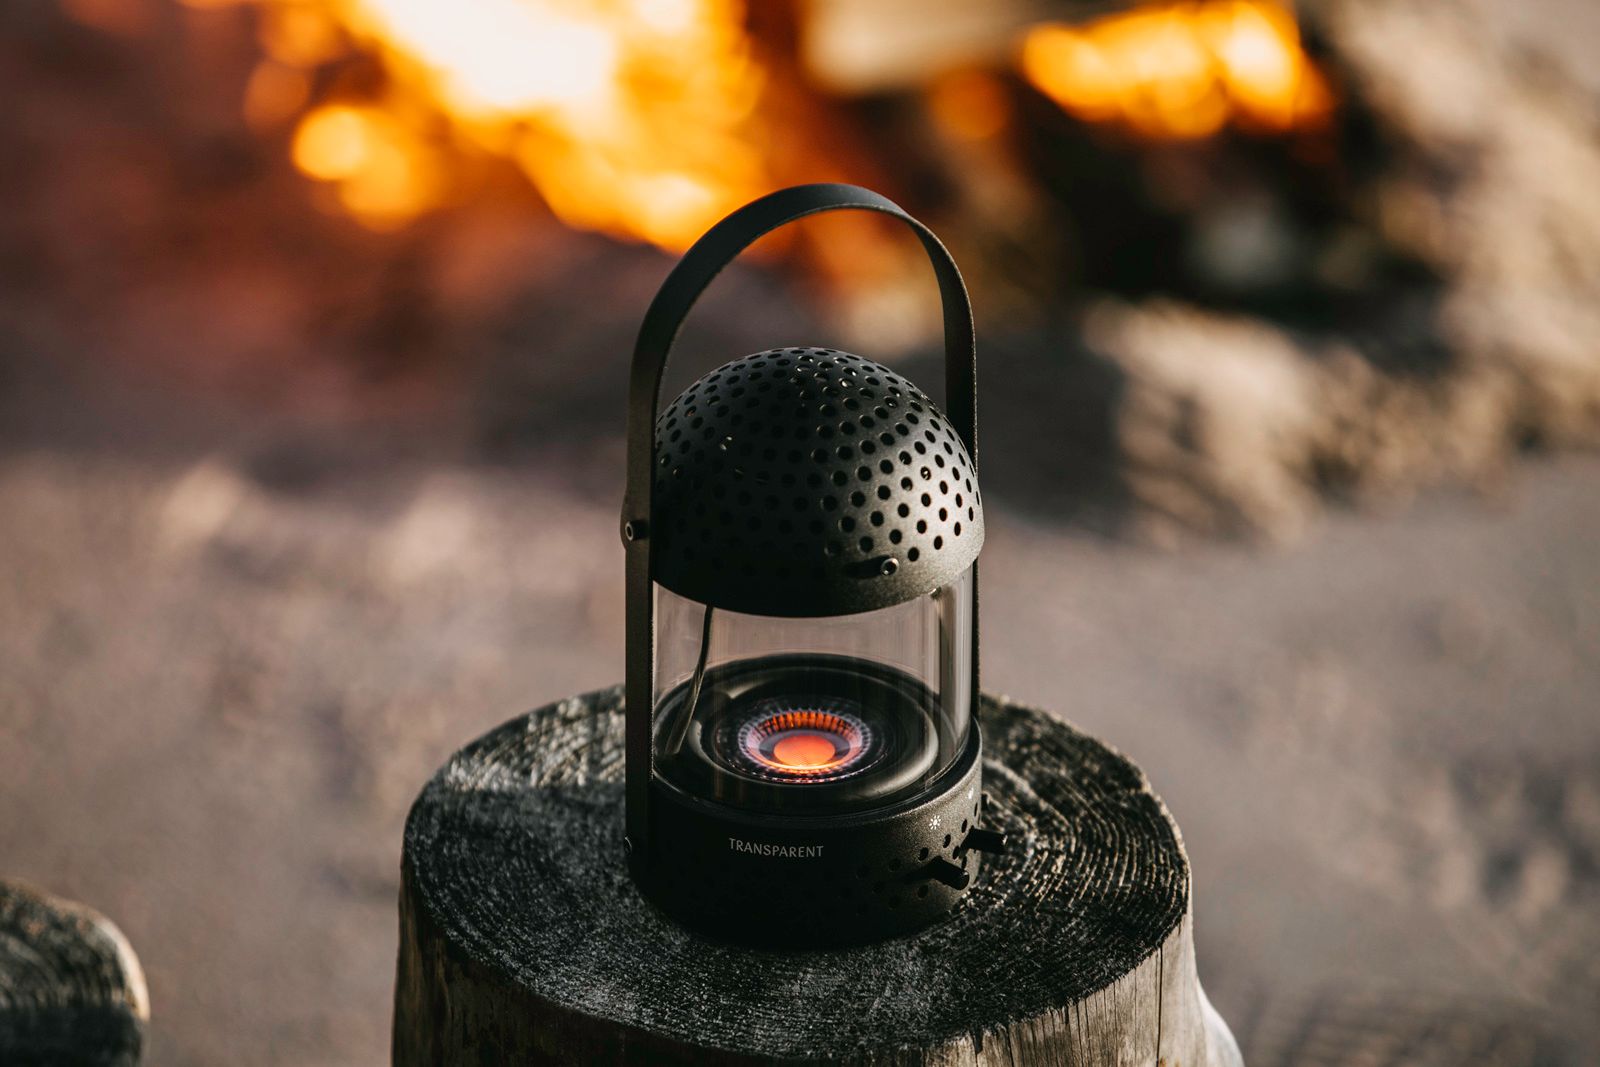 Transparent's latest speaker features a light that mimics firelight photo 3